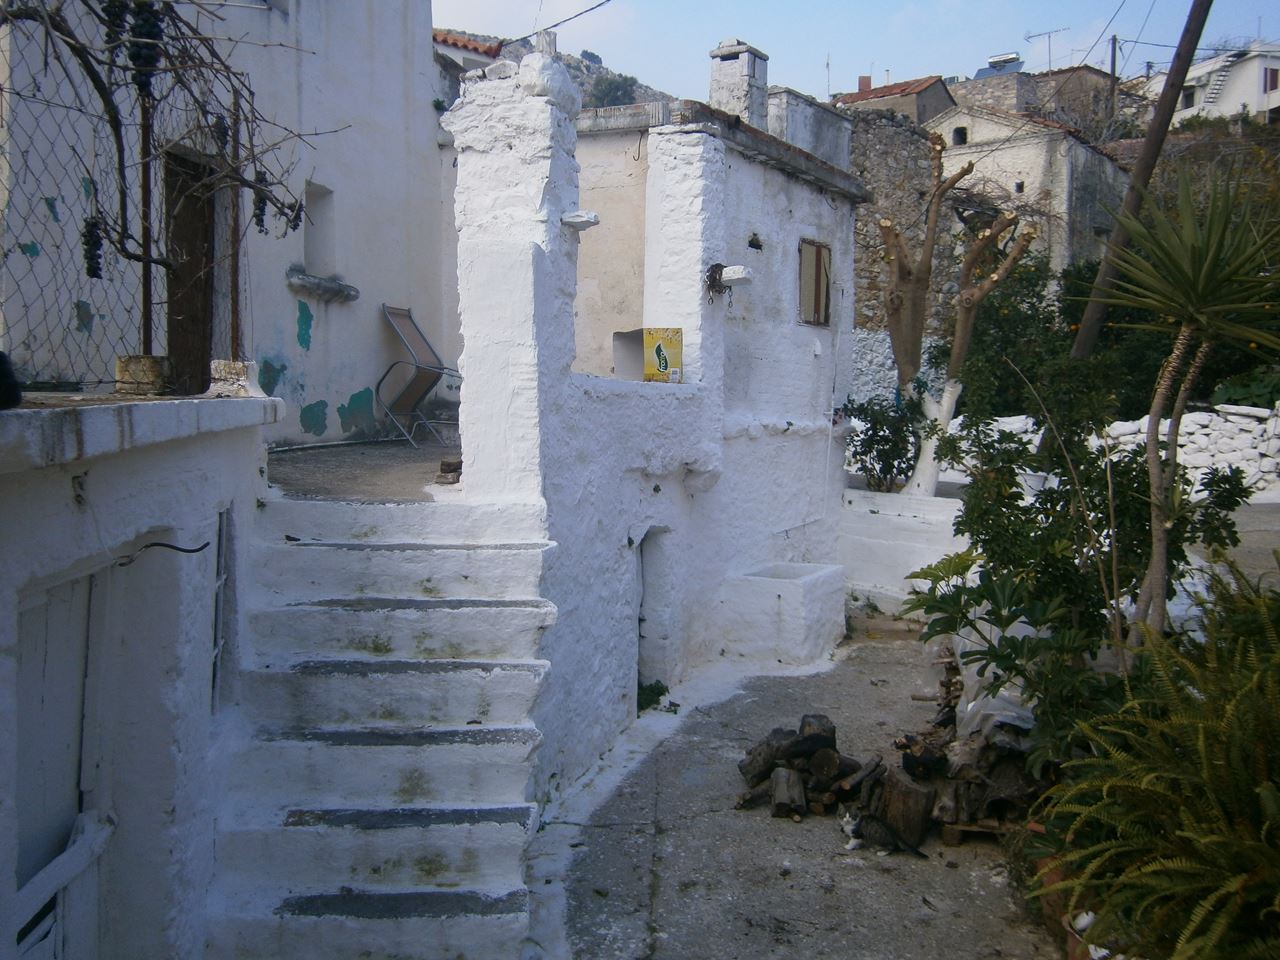 Two storey old building - Chios - Kardamyla